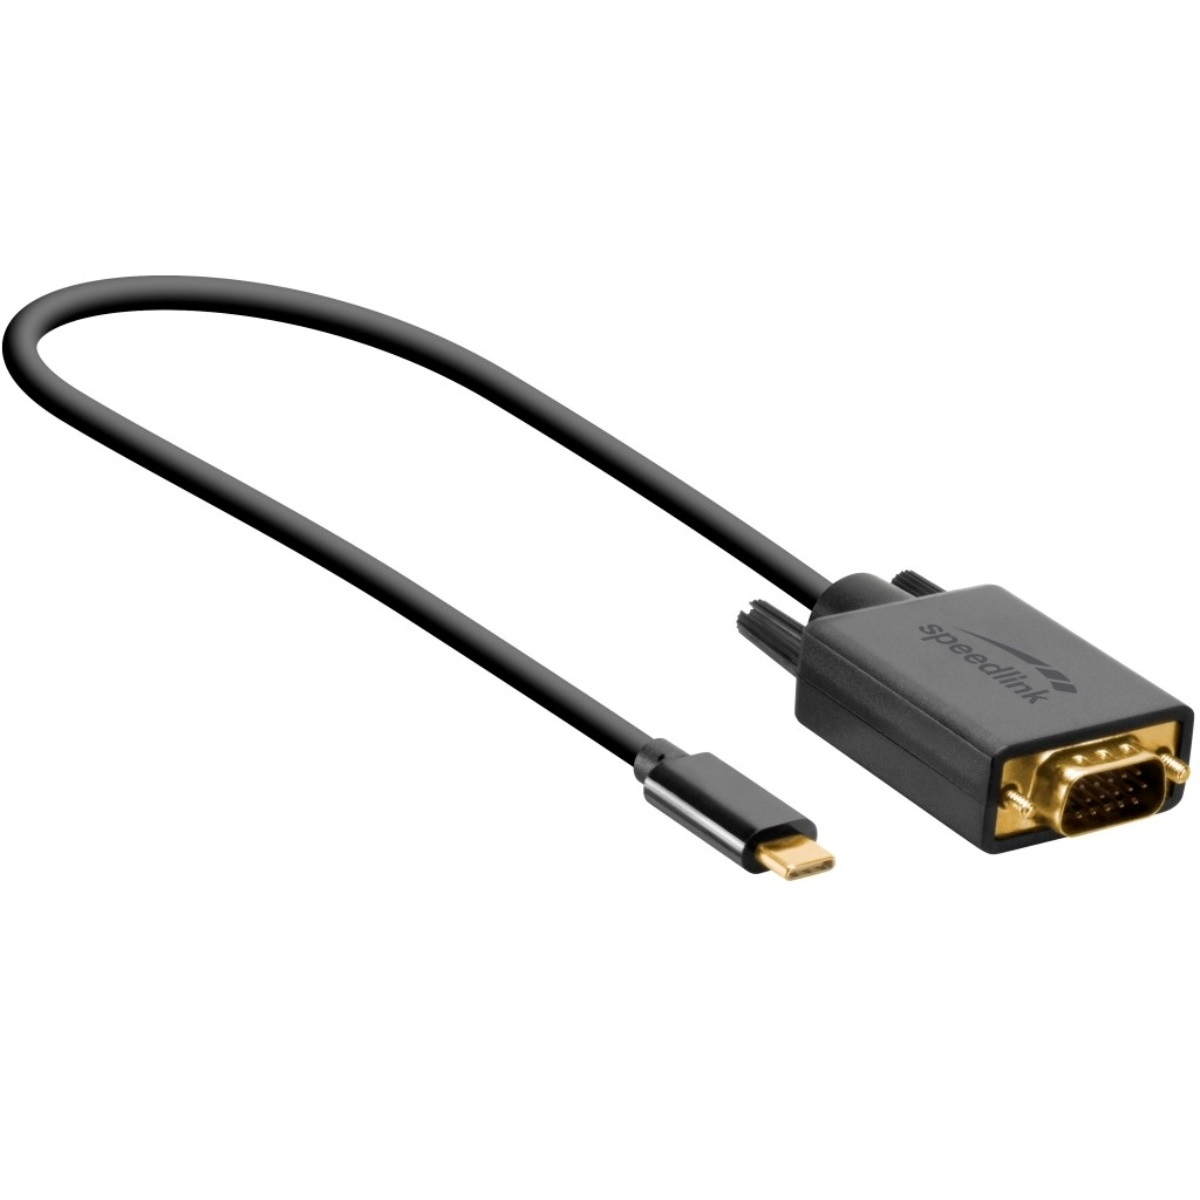 zu SPEEDLINK Adapter, Adapter-Kabel 1,8m HQ USB-C VGA USB-C Schwarz